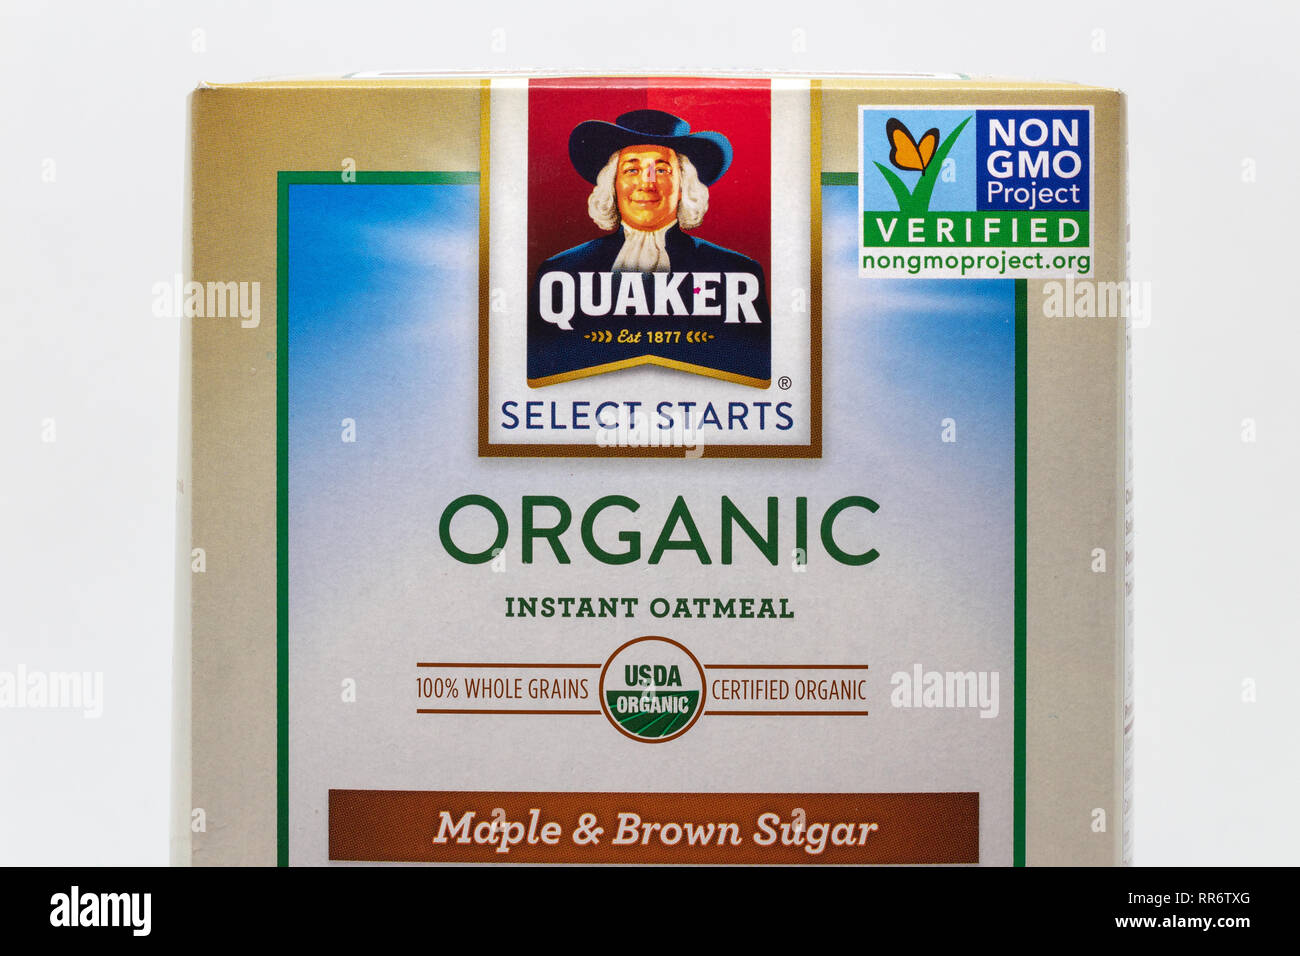 ST. PAUL, MN/USA - FEBRUARY 24, 2019: Quaker Select Starts Organic Oatmeal box with Non GMO Verified label and trademark logo. Stock Photo